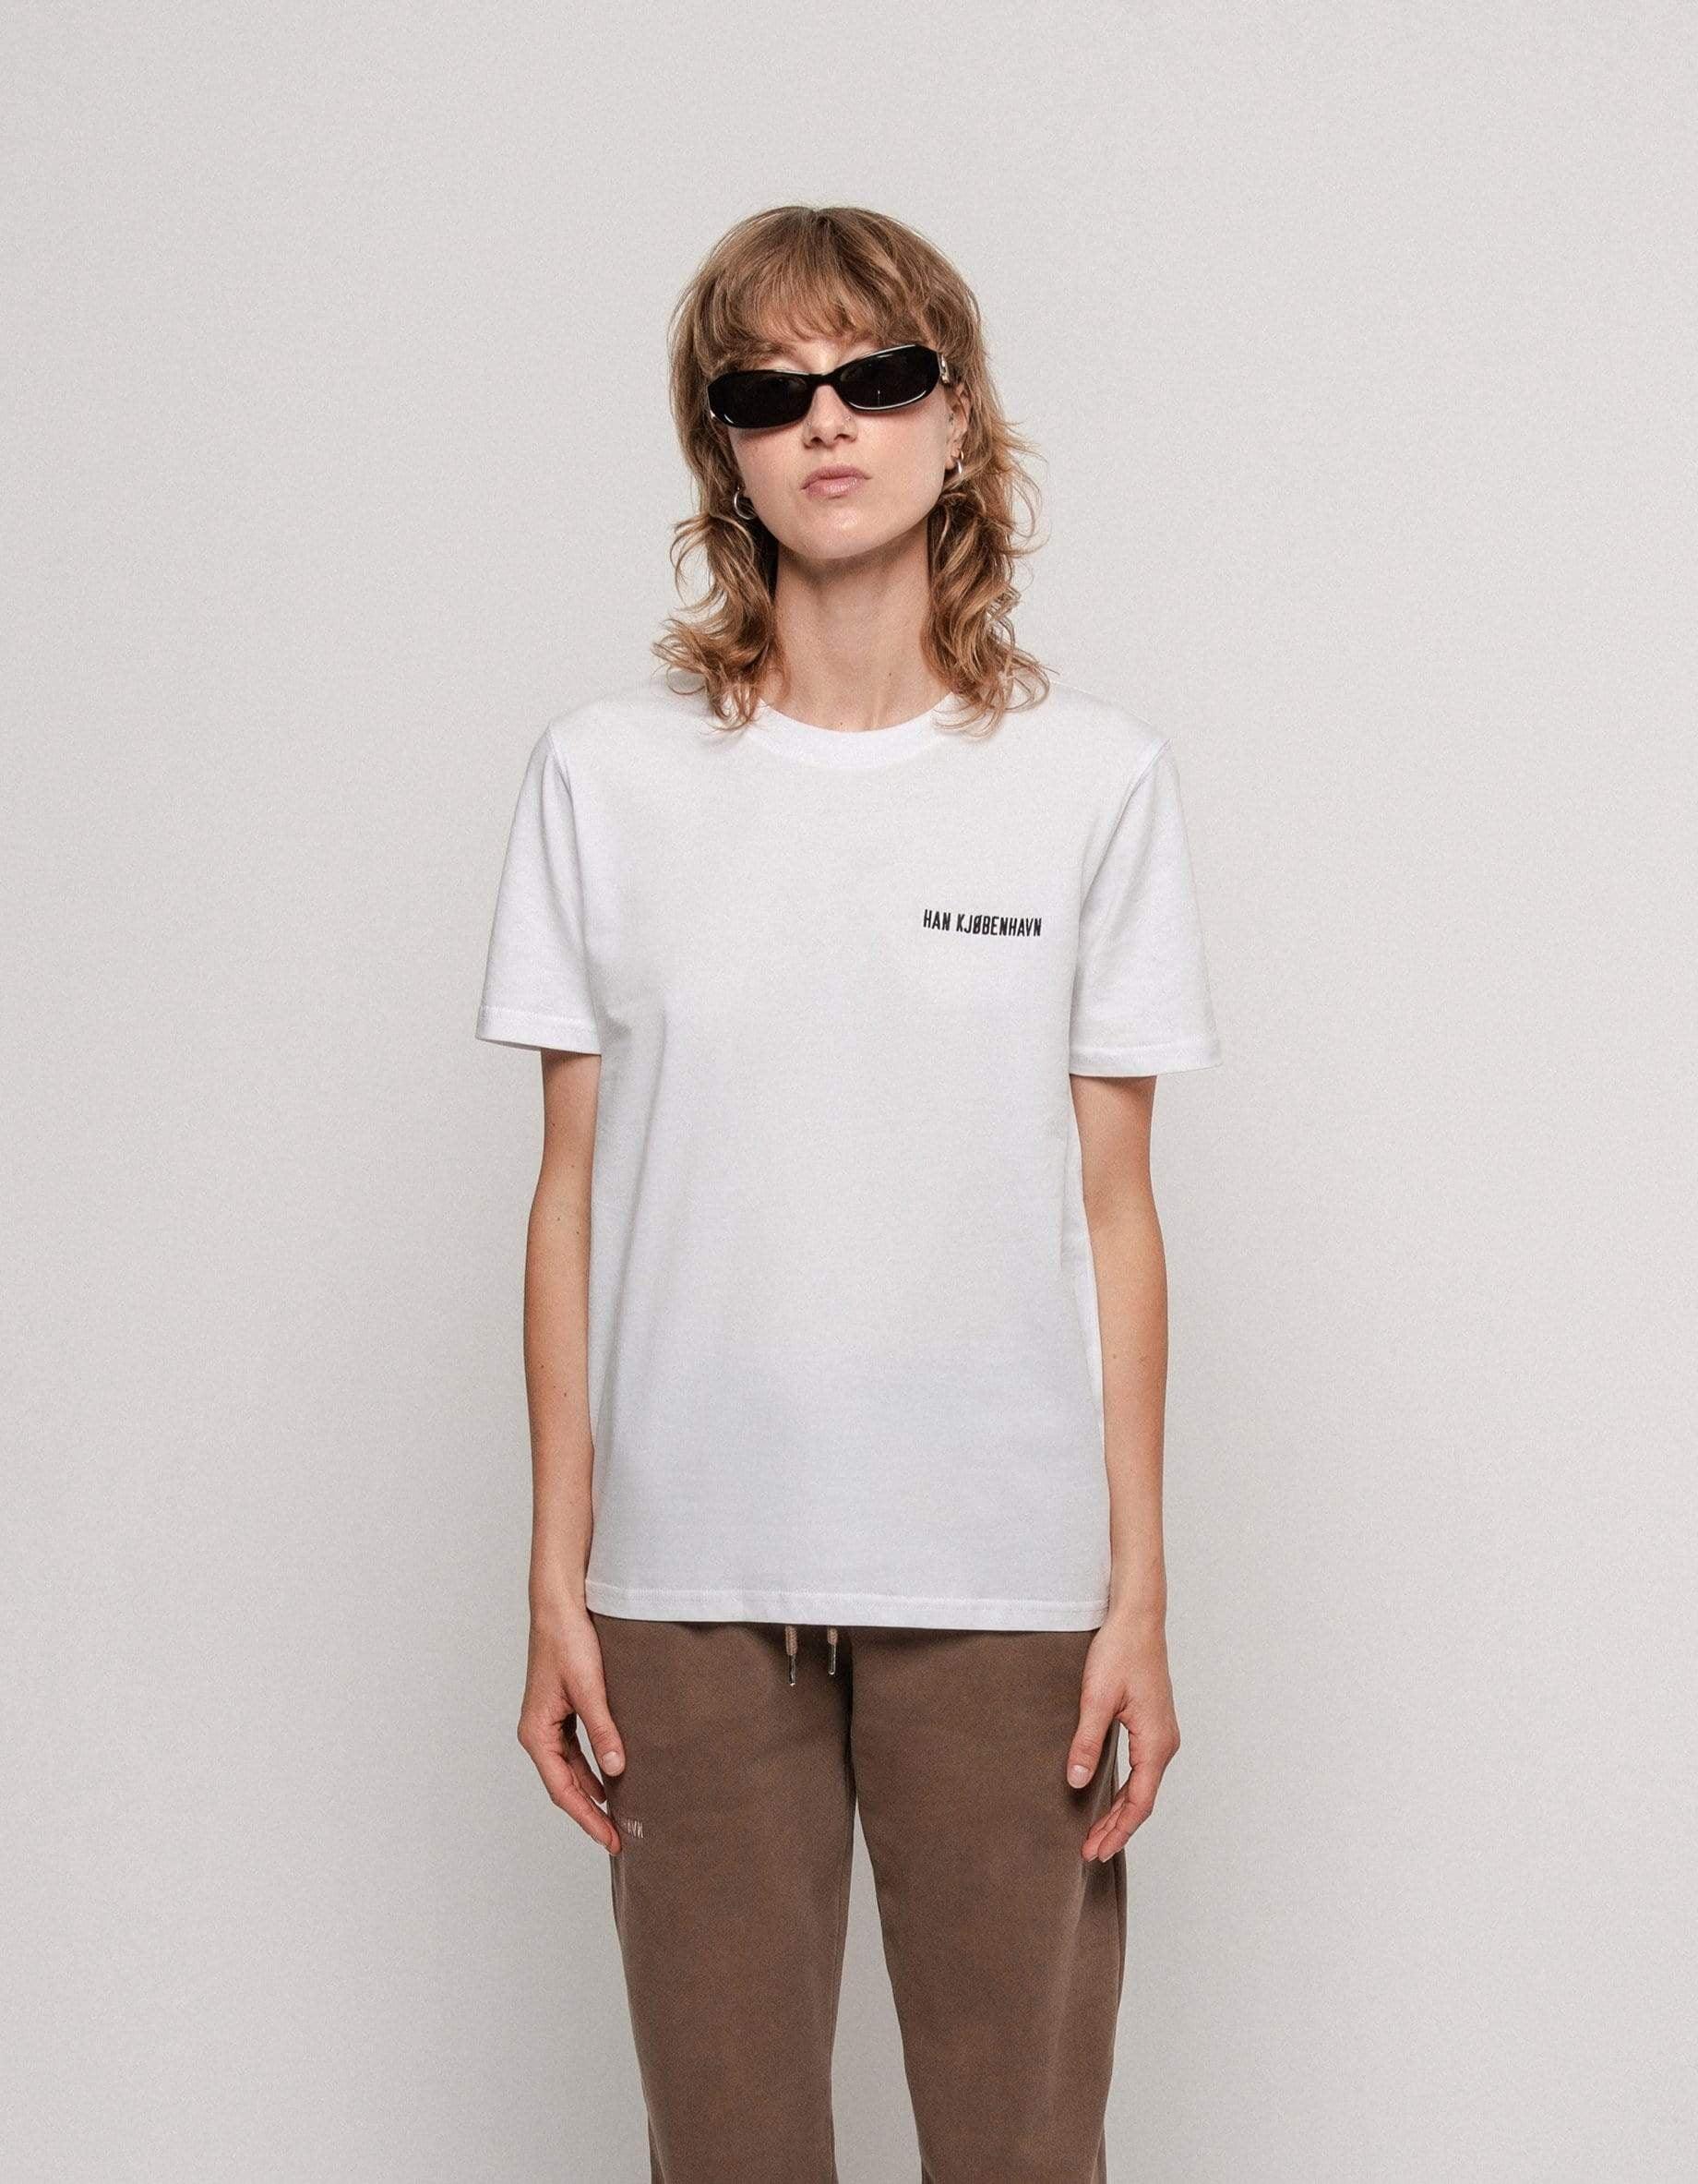 Prædike Harmoni talentfulde Han Kjøbenhavn t-shirt CASUAL TEE hvid female – Boutique Dig & Mig